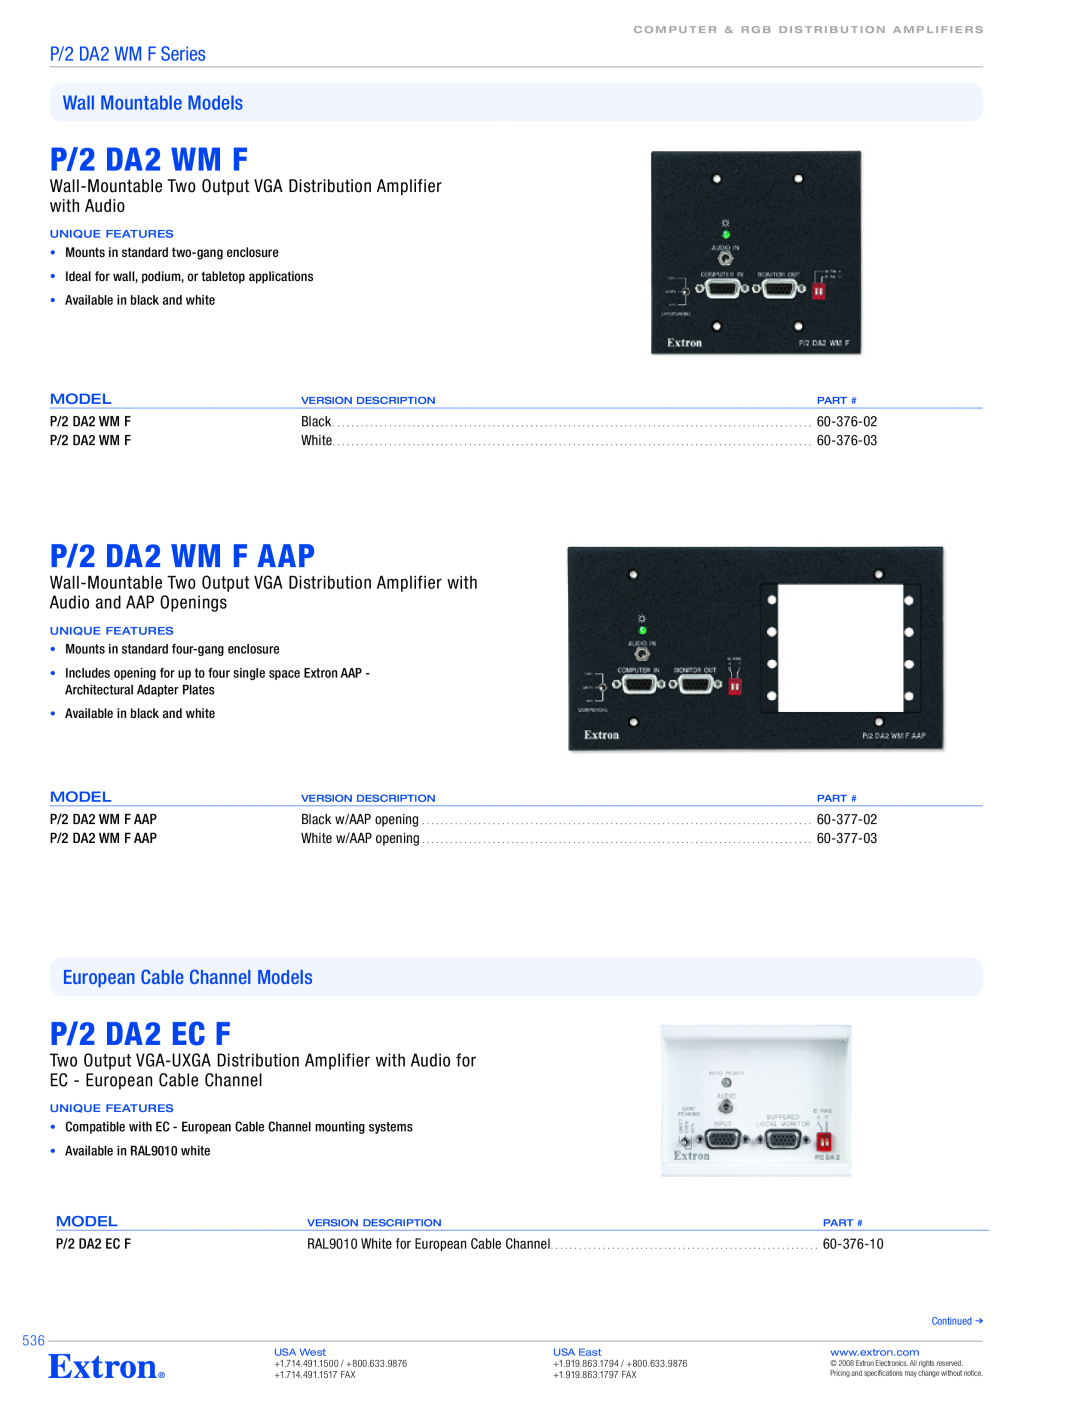 Extron electronic P/2 DA2 AAP P/2 DA2 WM F AAP, P/2 DA2 EC F, P/2 DA2 WM F Series Wall Mountable Models, 60-376-02 